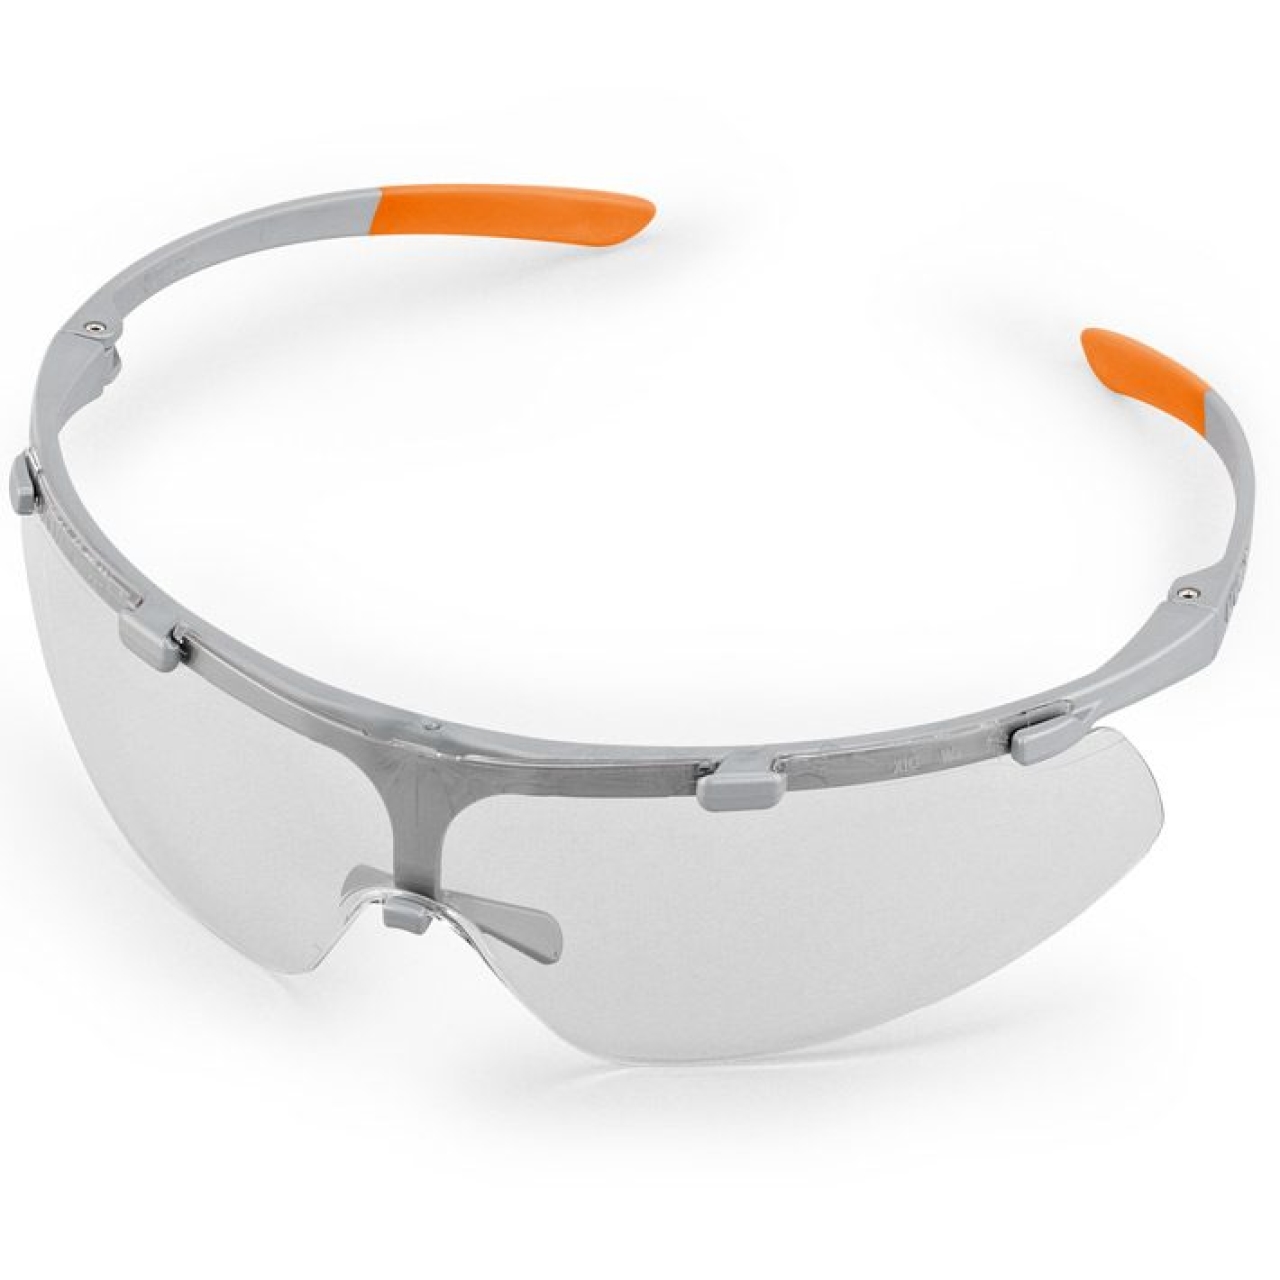 Stihl Schutzbrille Advance Super Fit - Transparent